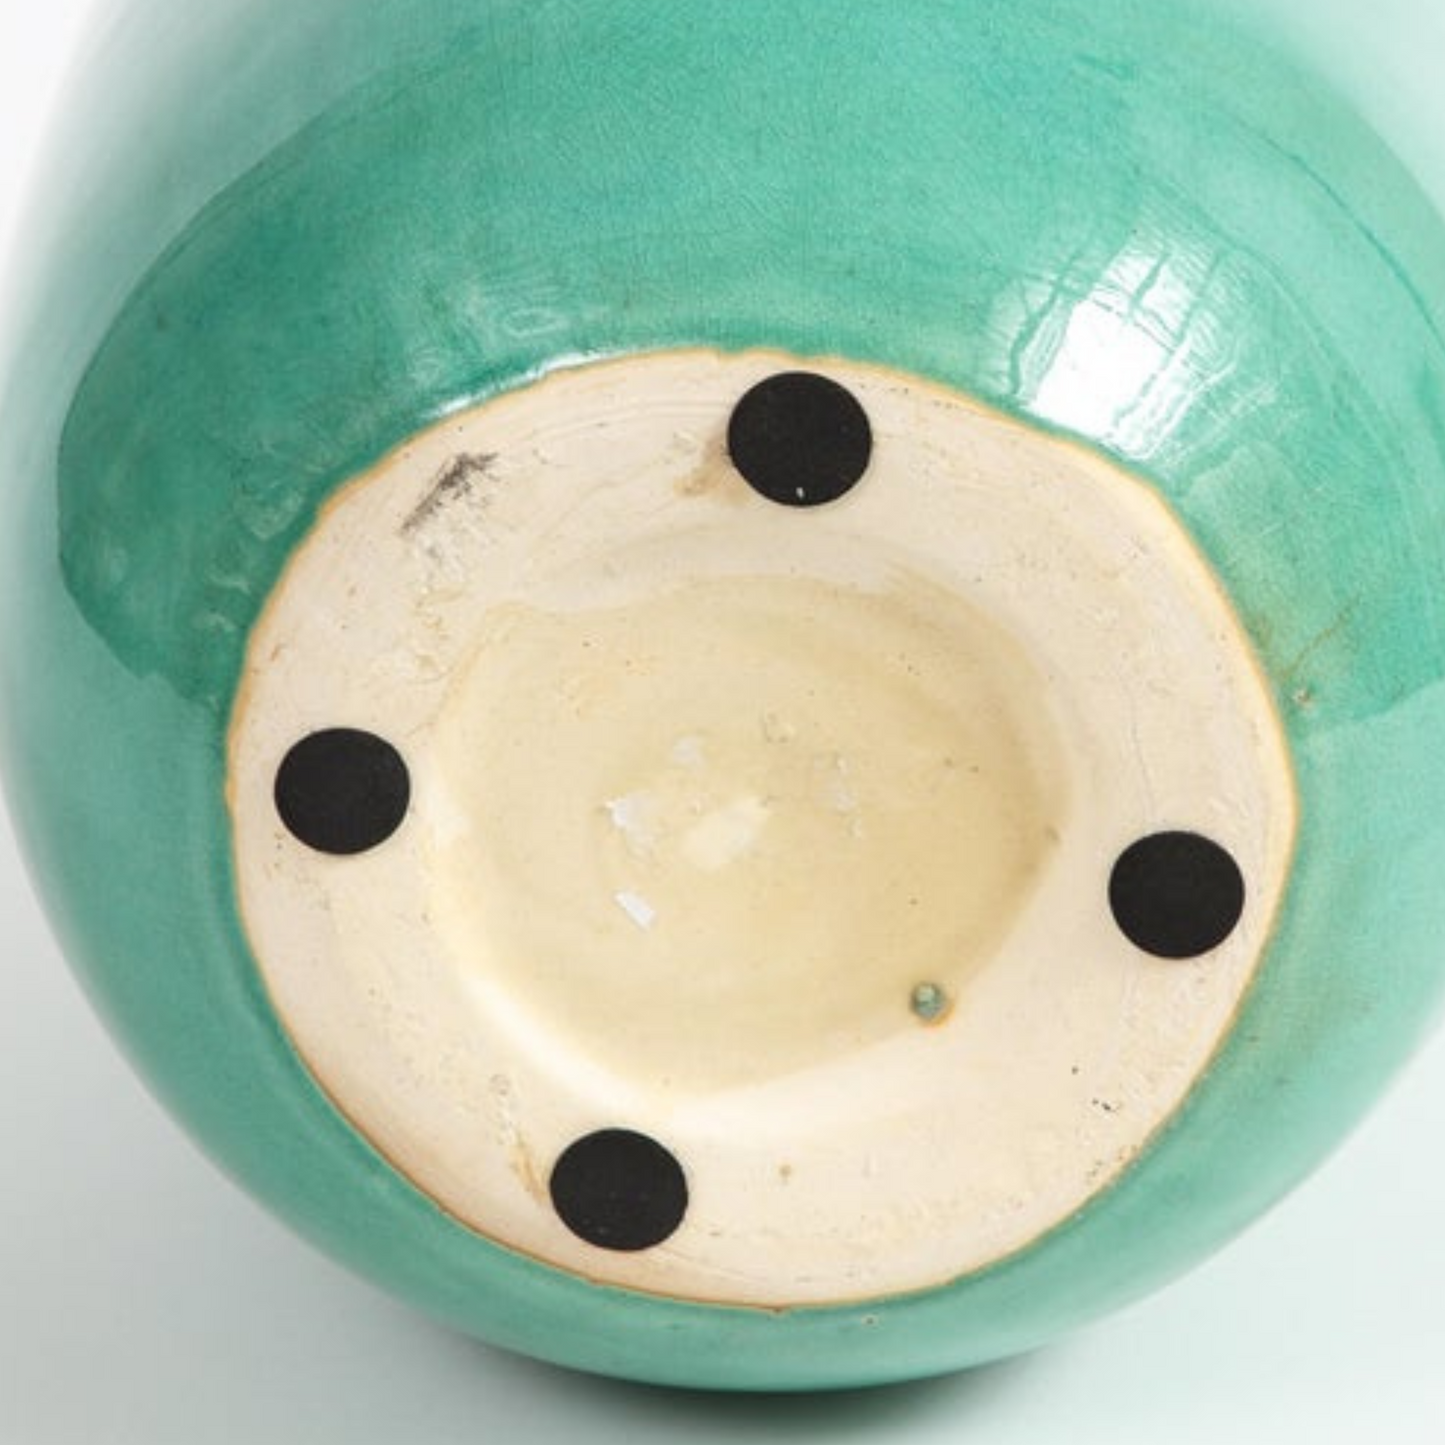 Teal Pottery Vase Circa 1960